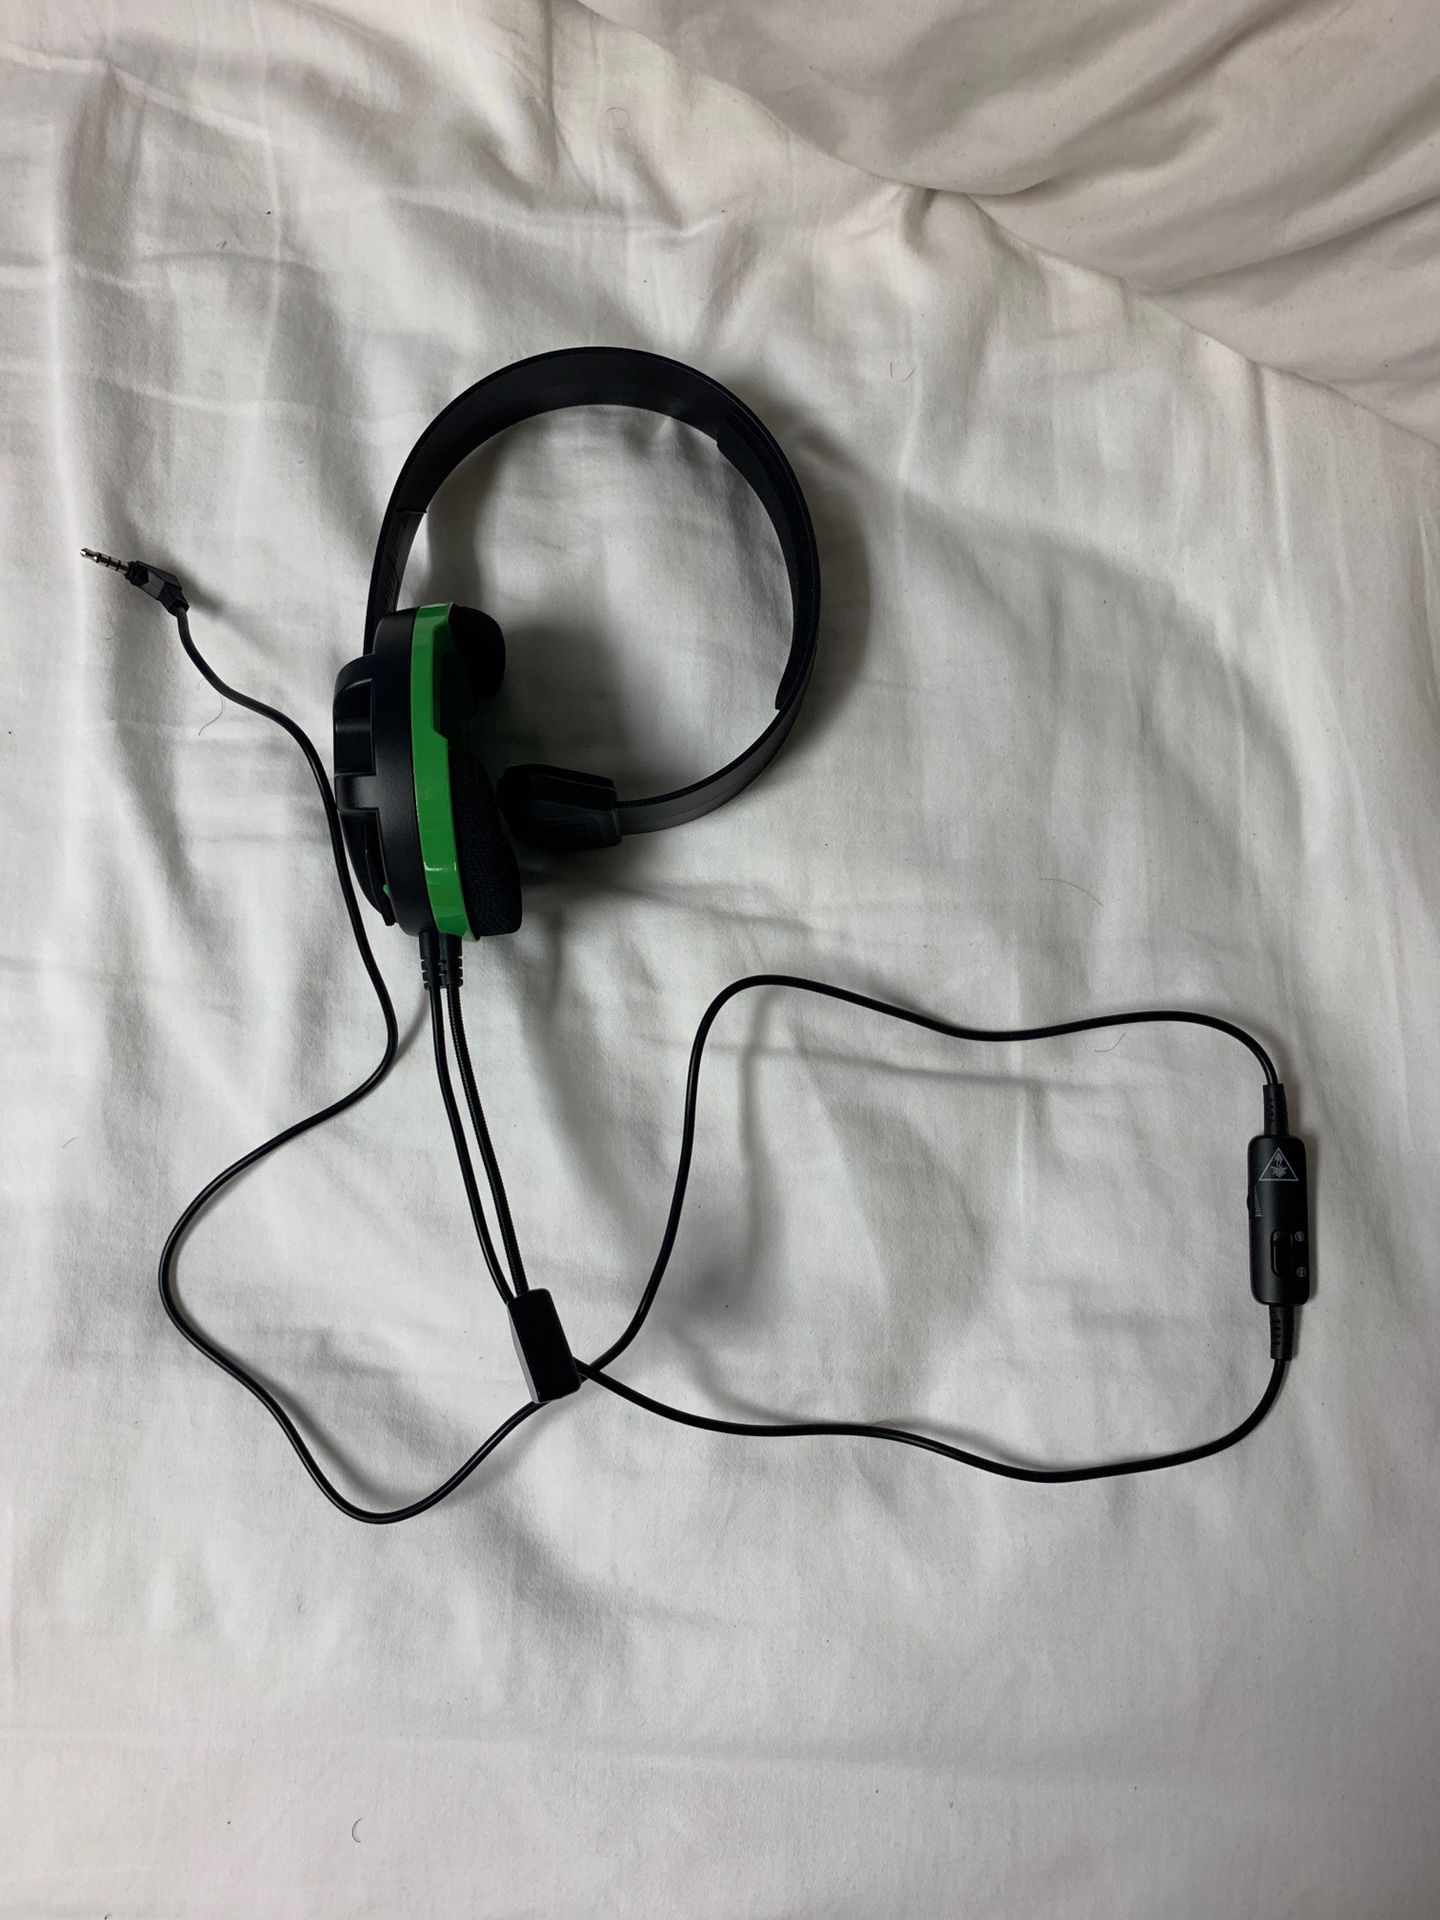 Green turtle beach Xbox headset